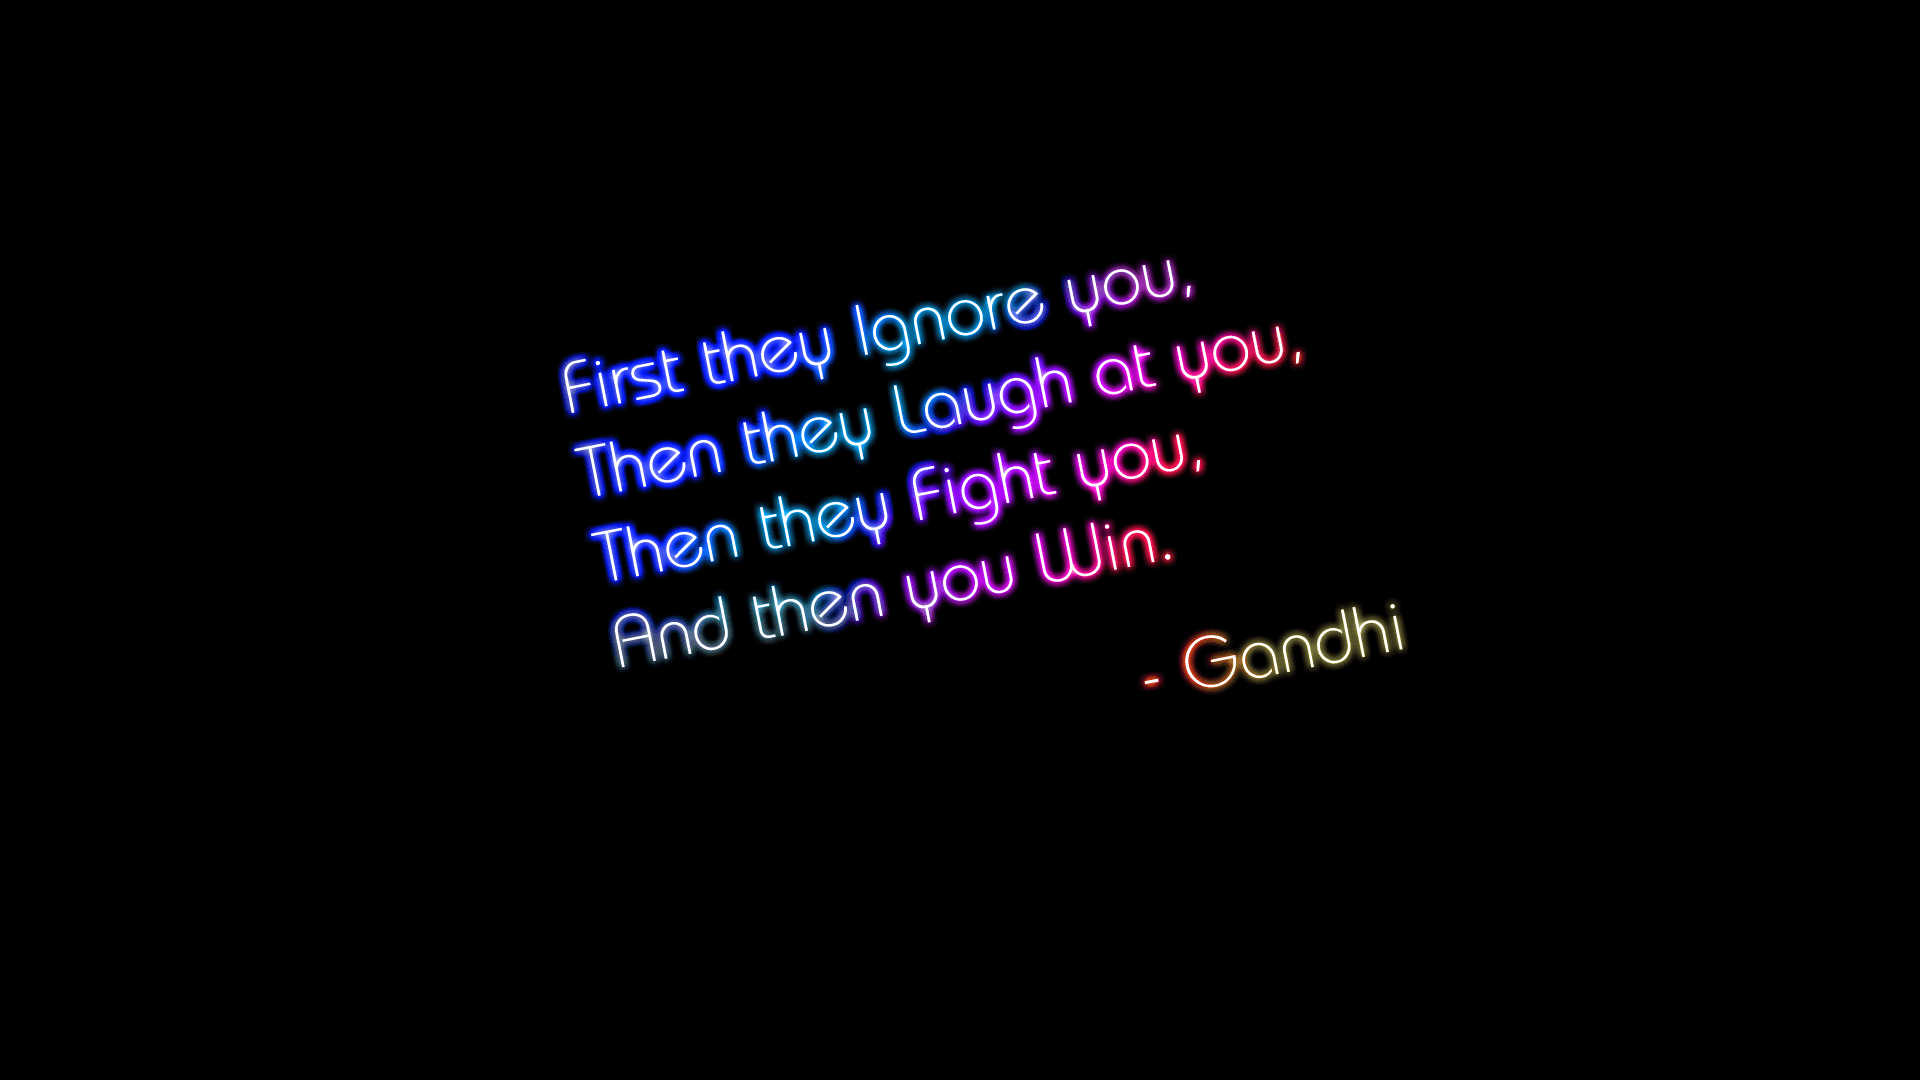 Life quote by Mahatma Gandhi HD Wallpaper